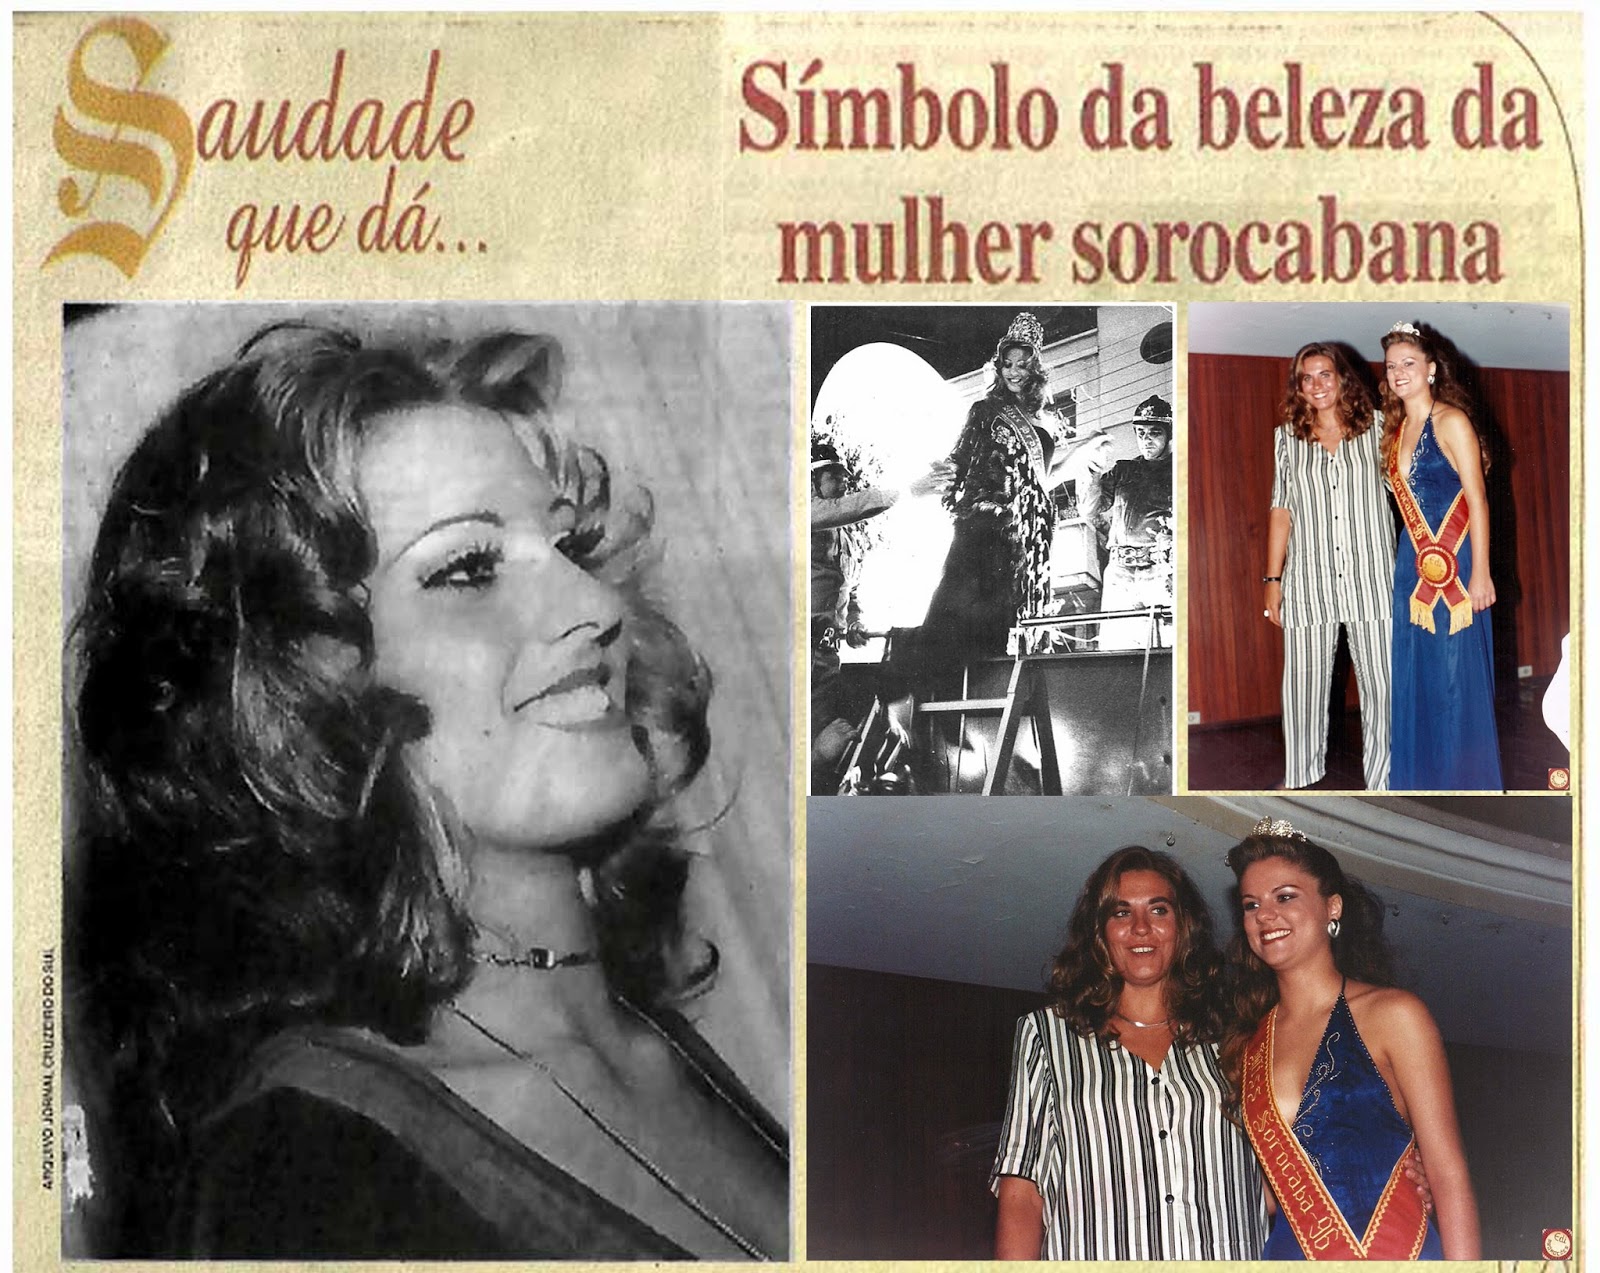 katia celestina moretto, miss brasil 1976 (1957 - 04/29/2013). † Morte_de_K_tia_2